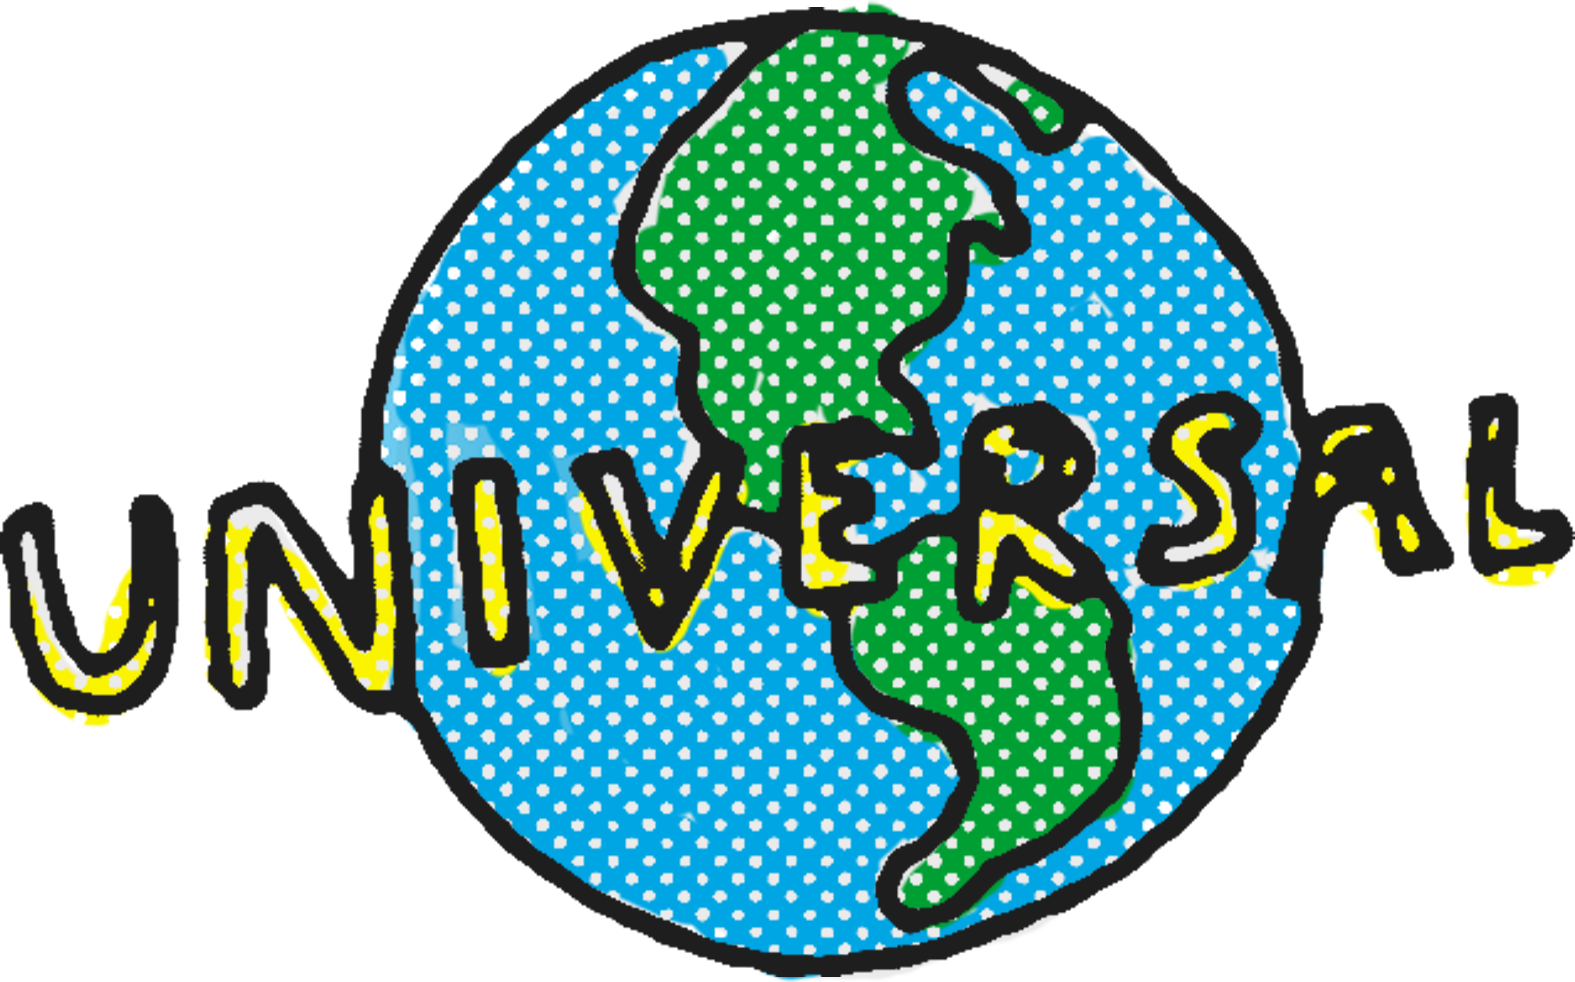 Drawing of Universal Studios logo